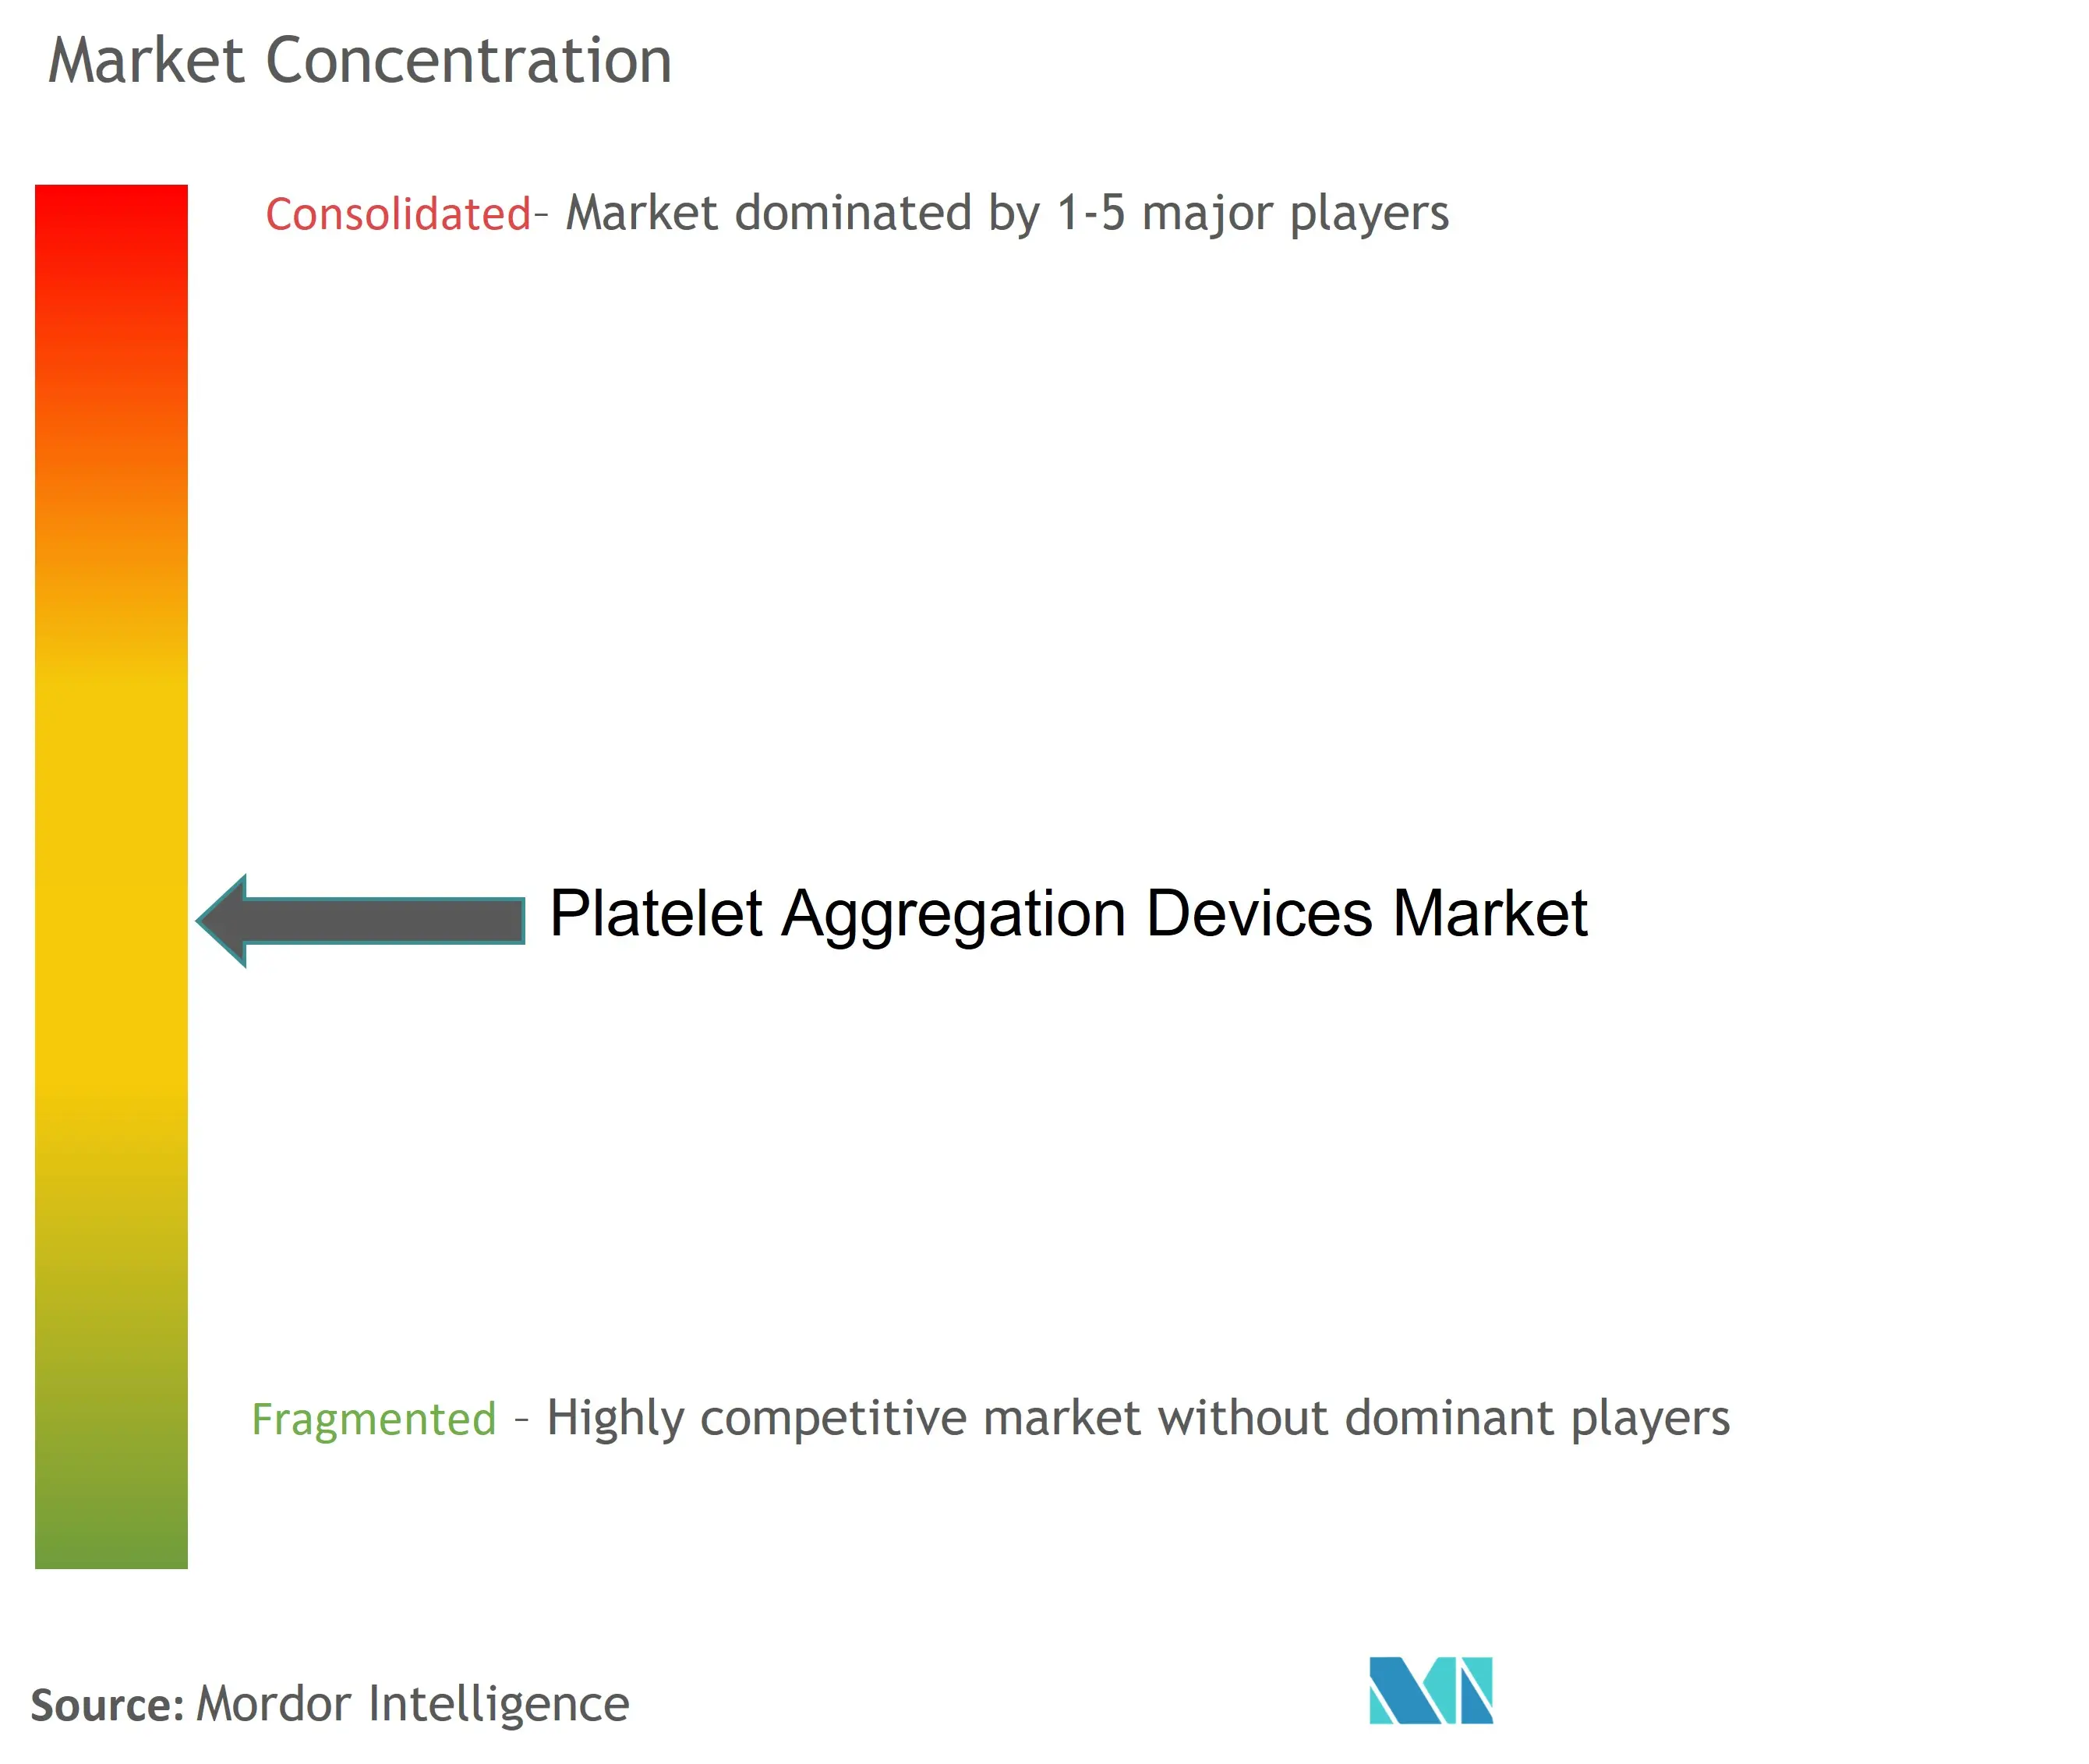 Platelet Aggregation Devices Market Concentration